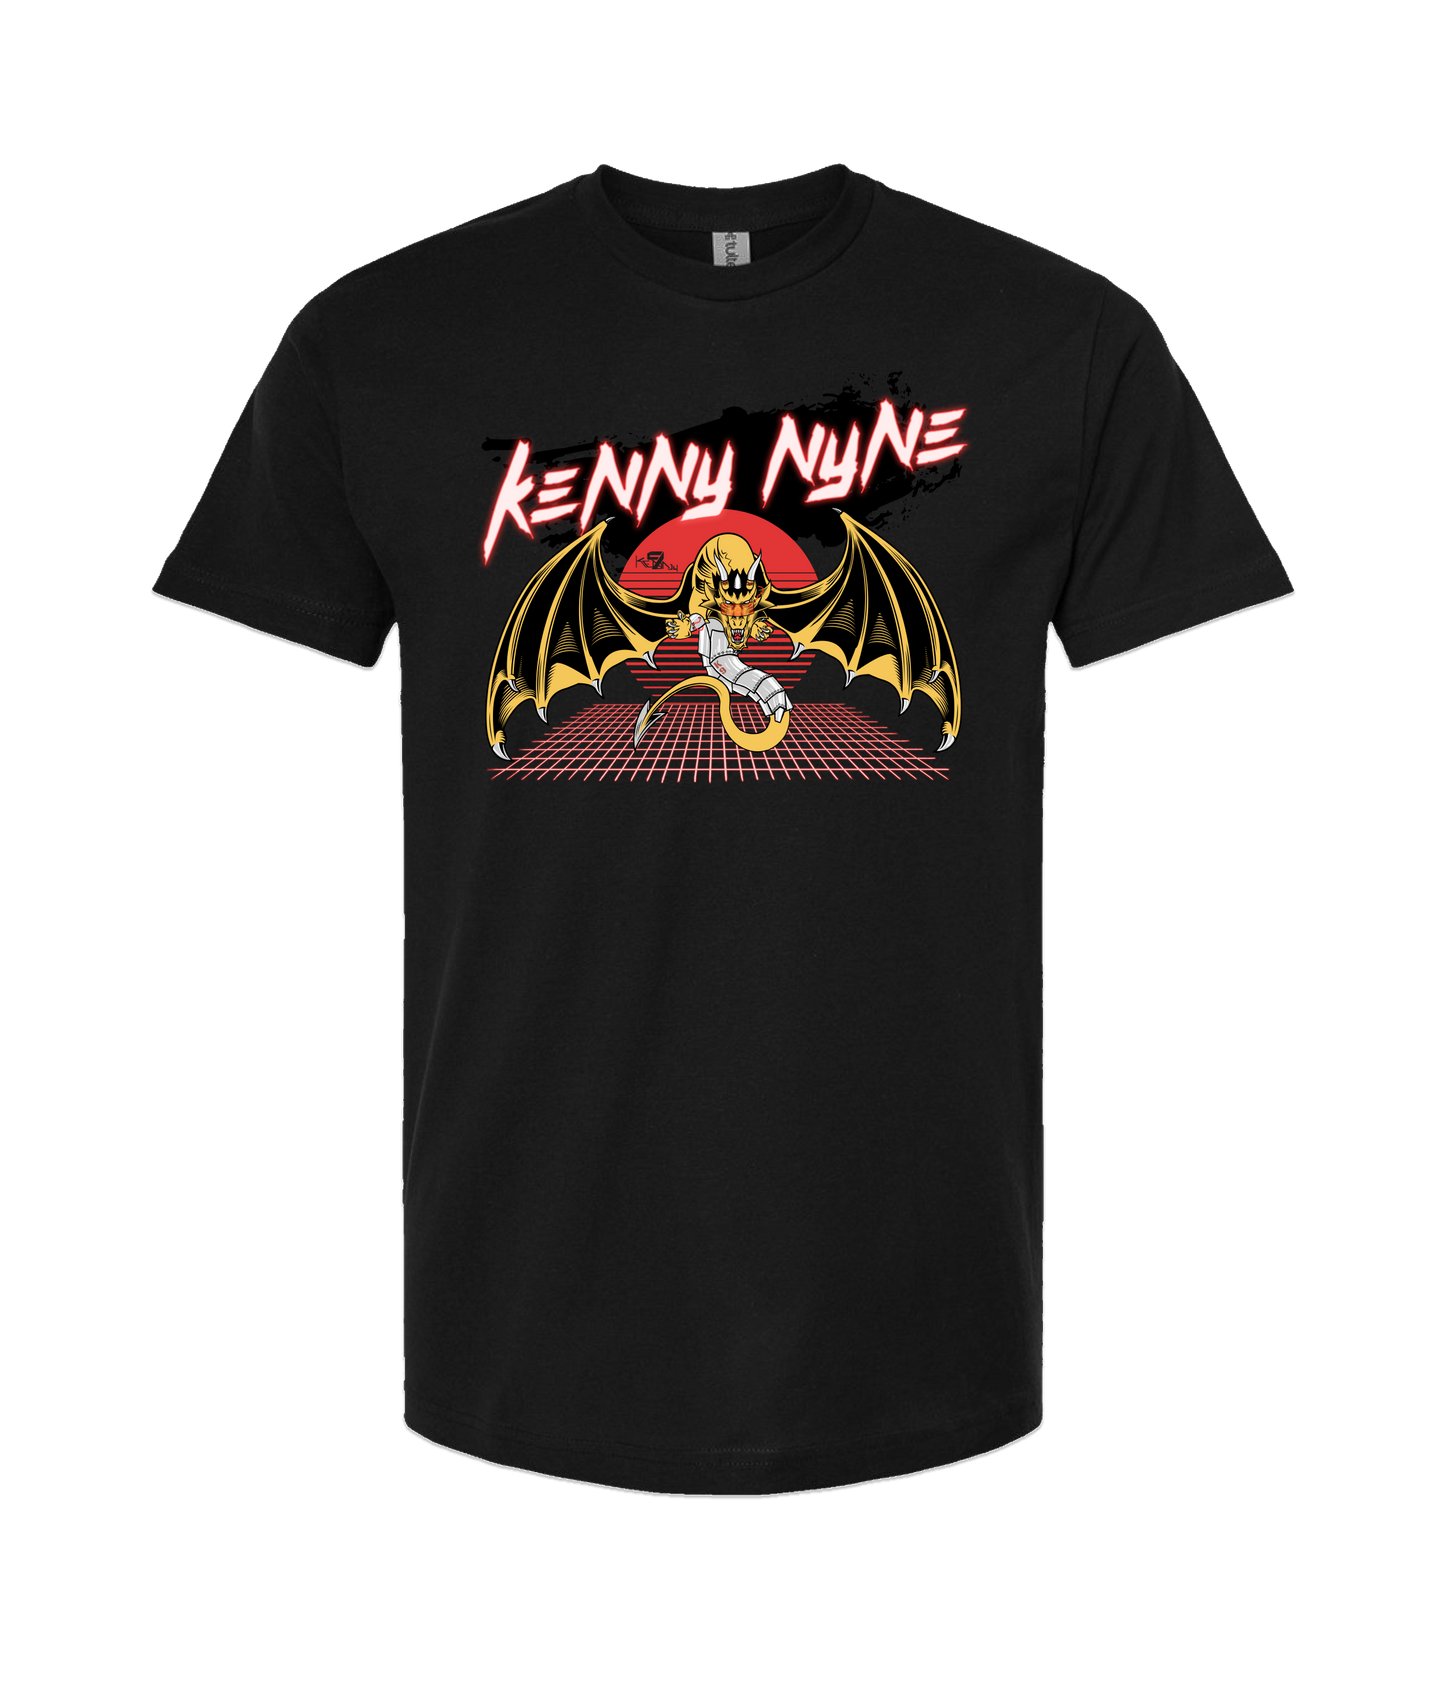 Kenny Nyne - Cyberdragon - Black T Shirt